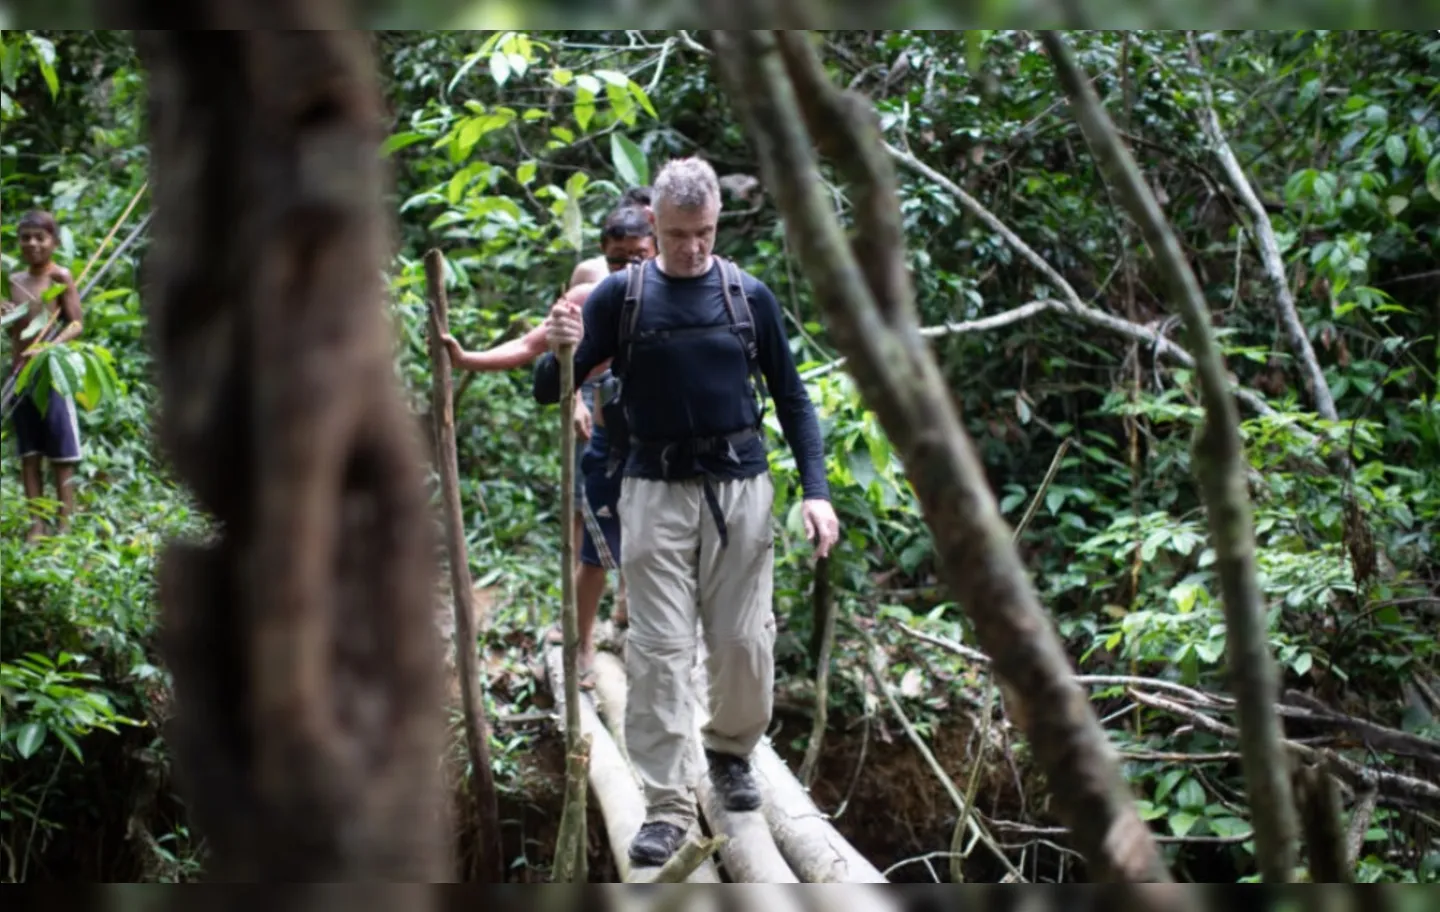 O jornalista britânico Dominic Phillips foi assassinado enquanto trabalhava na Amazônia